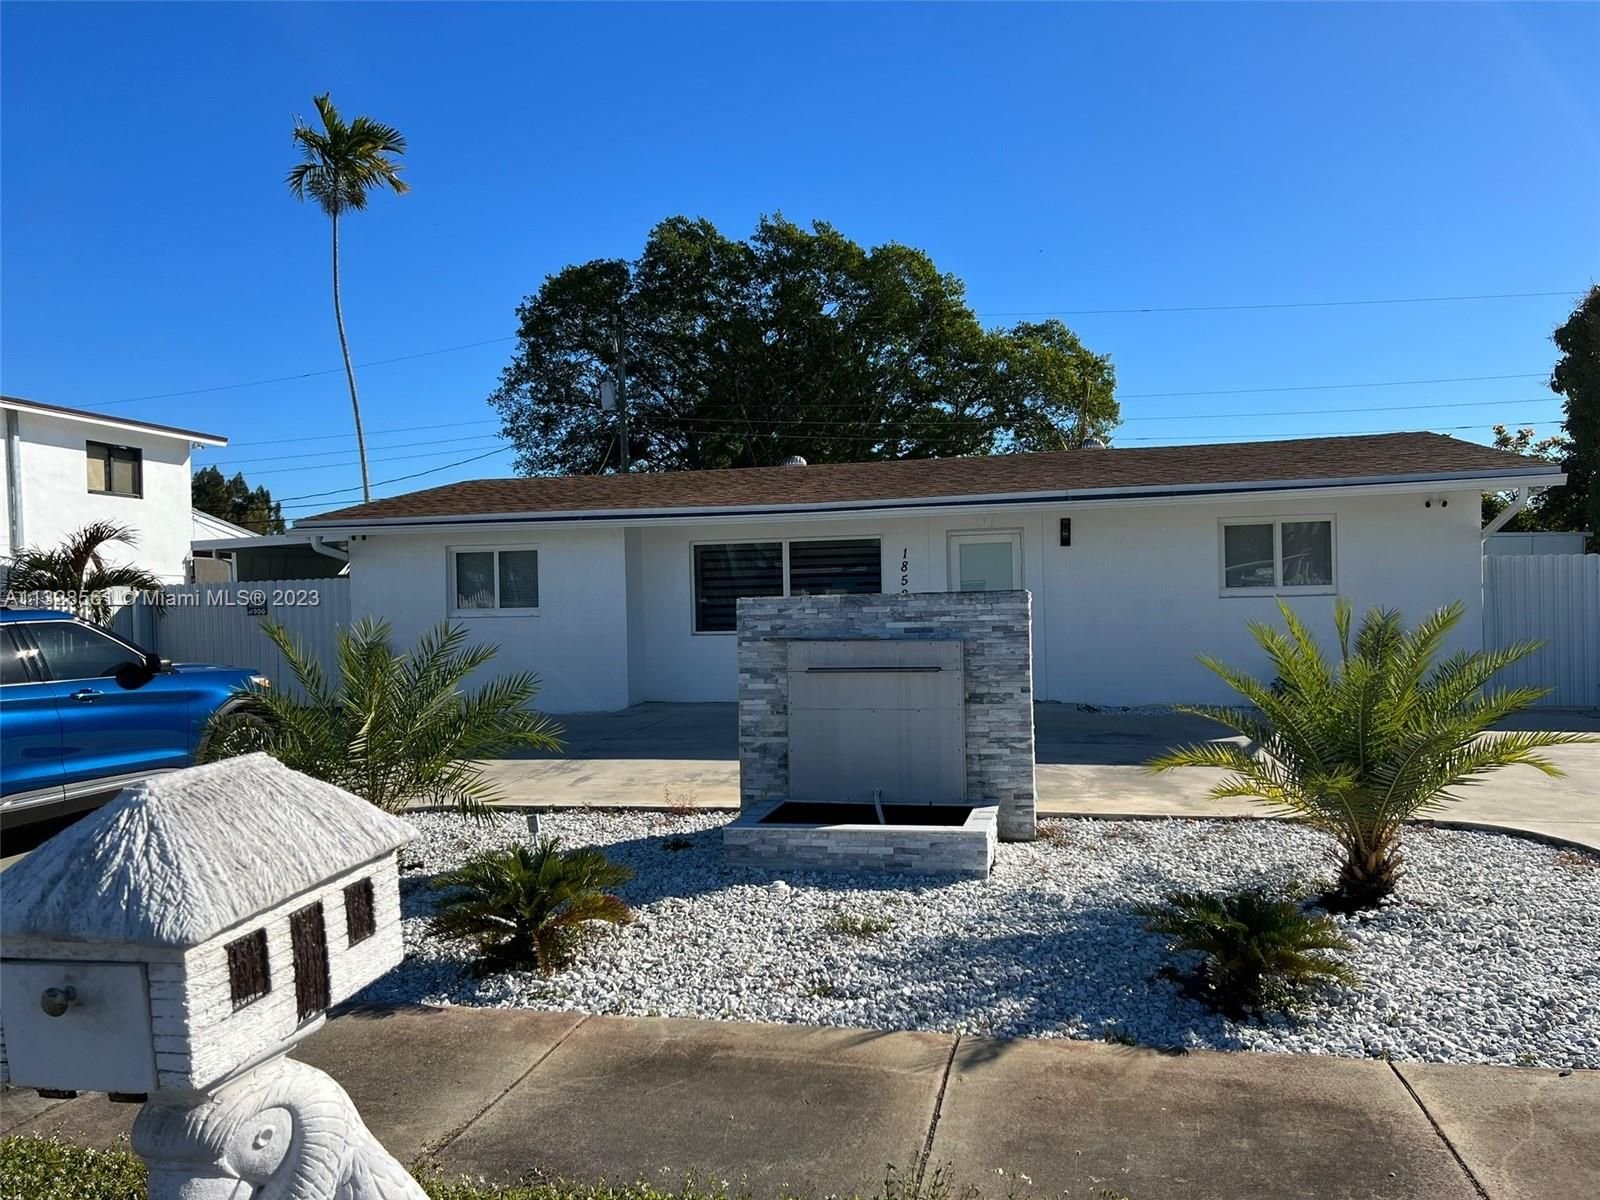 Real estate property located at 18525 38th Ave, Miami-Dade County, Miami Gardens, FL